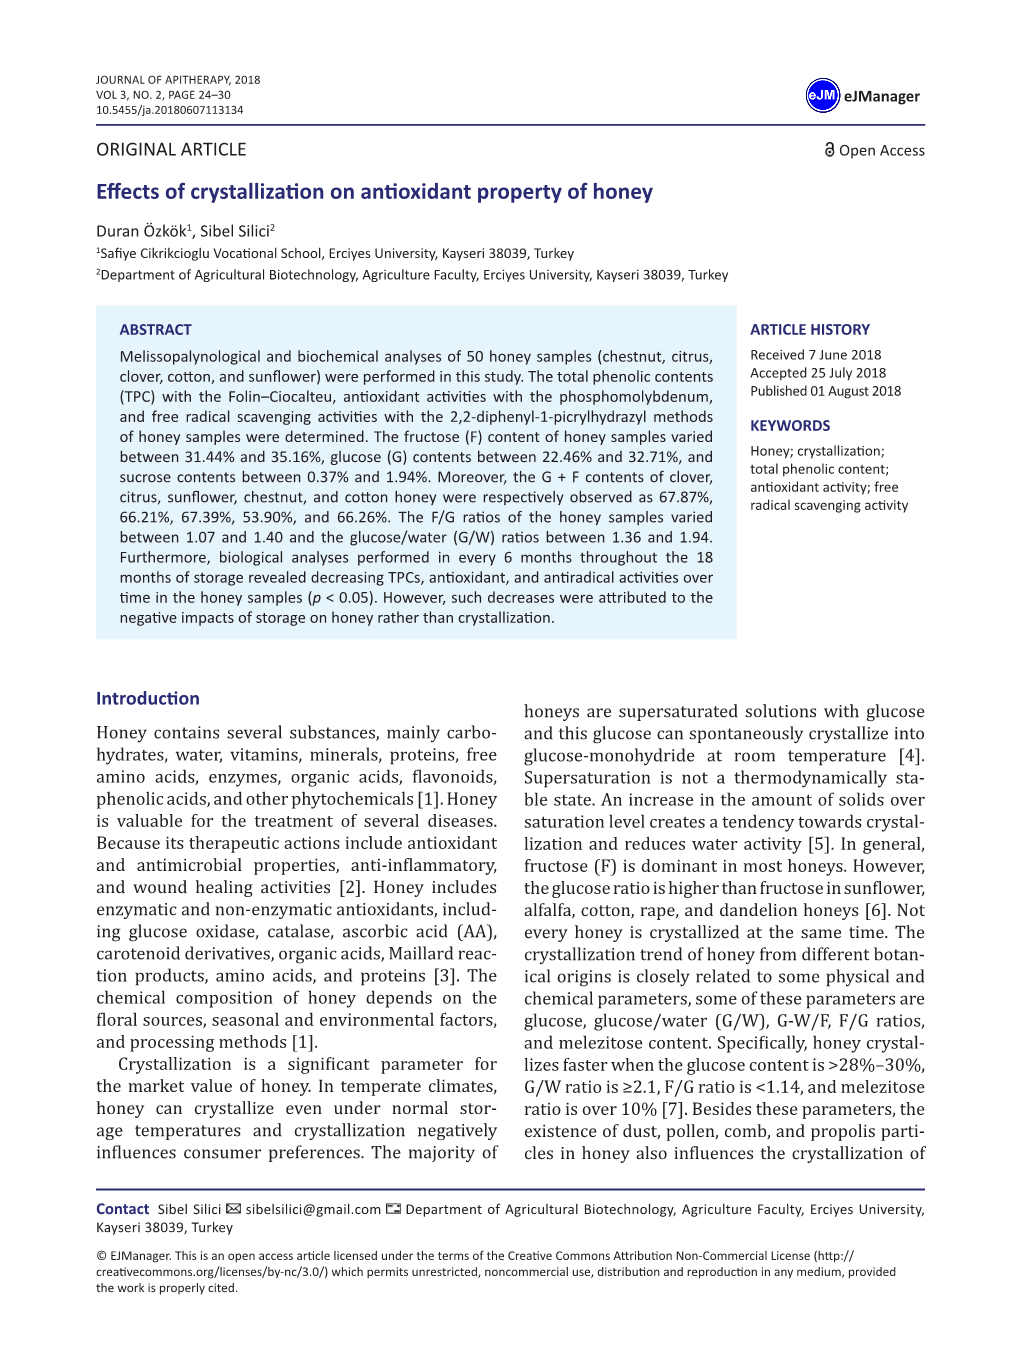 Effects of Crystallization on Antioxidant Property of Honey